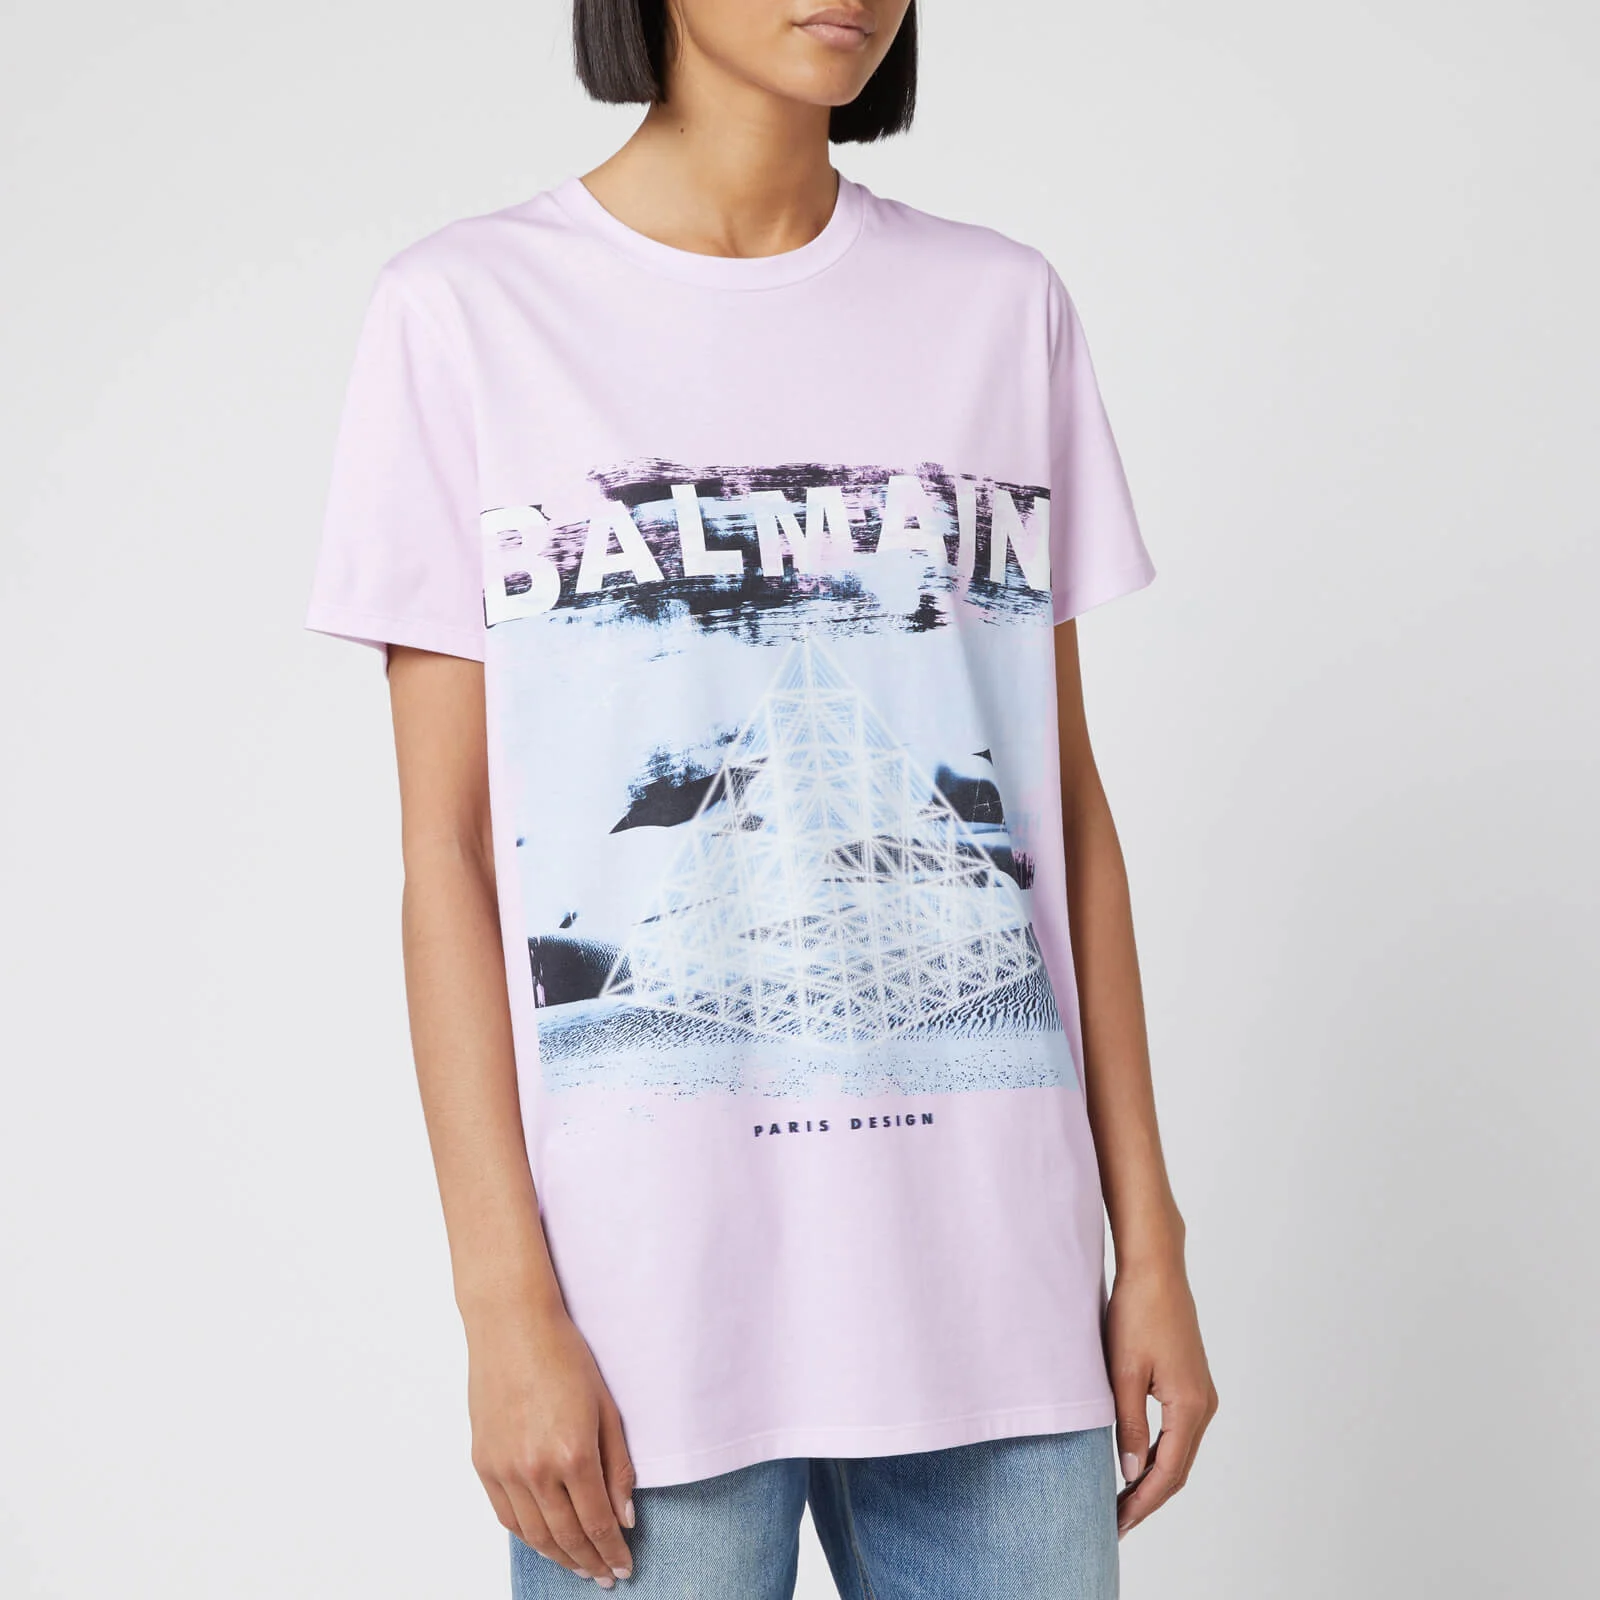 Balmain Women's Pyramid Print T-Shirt - Multi Image 1